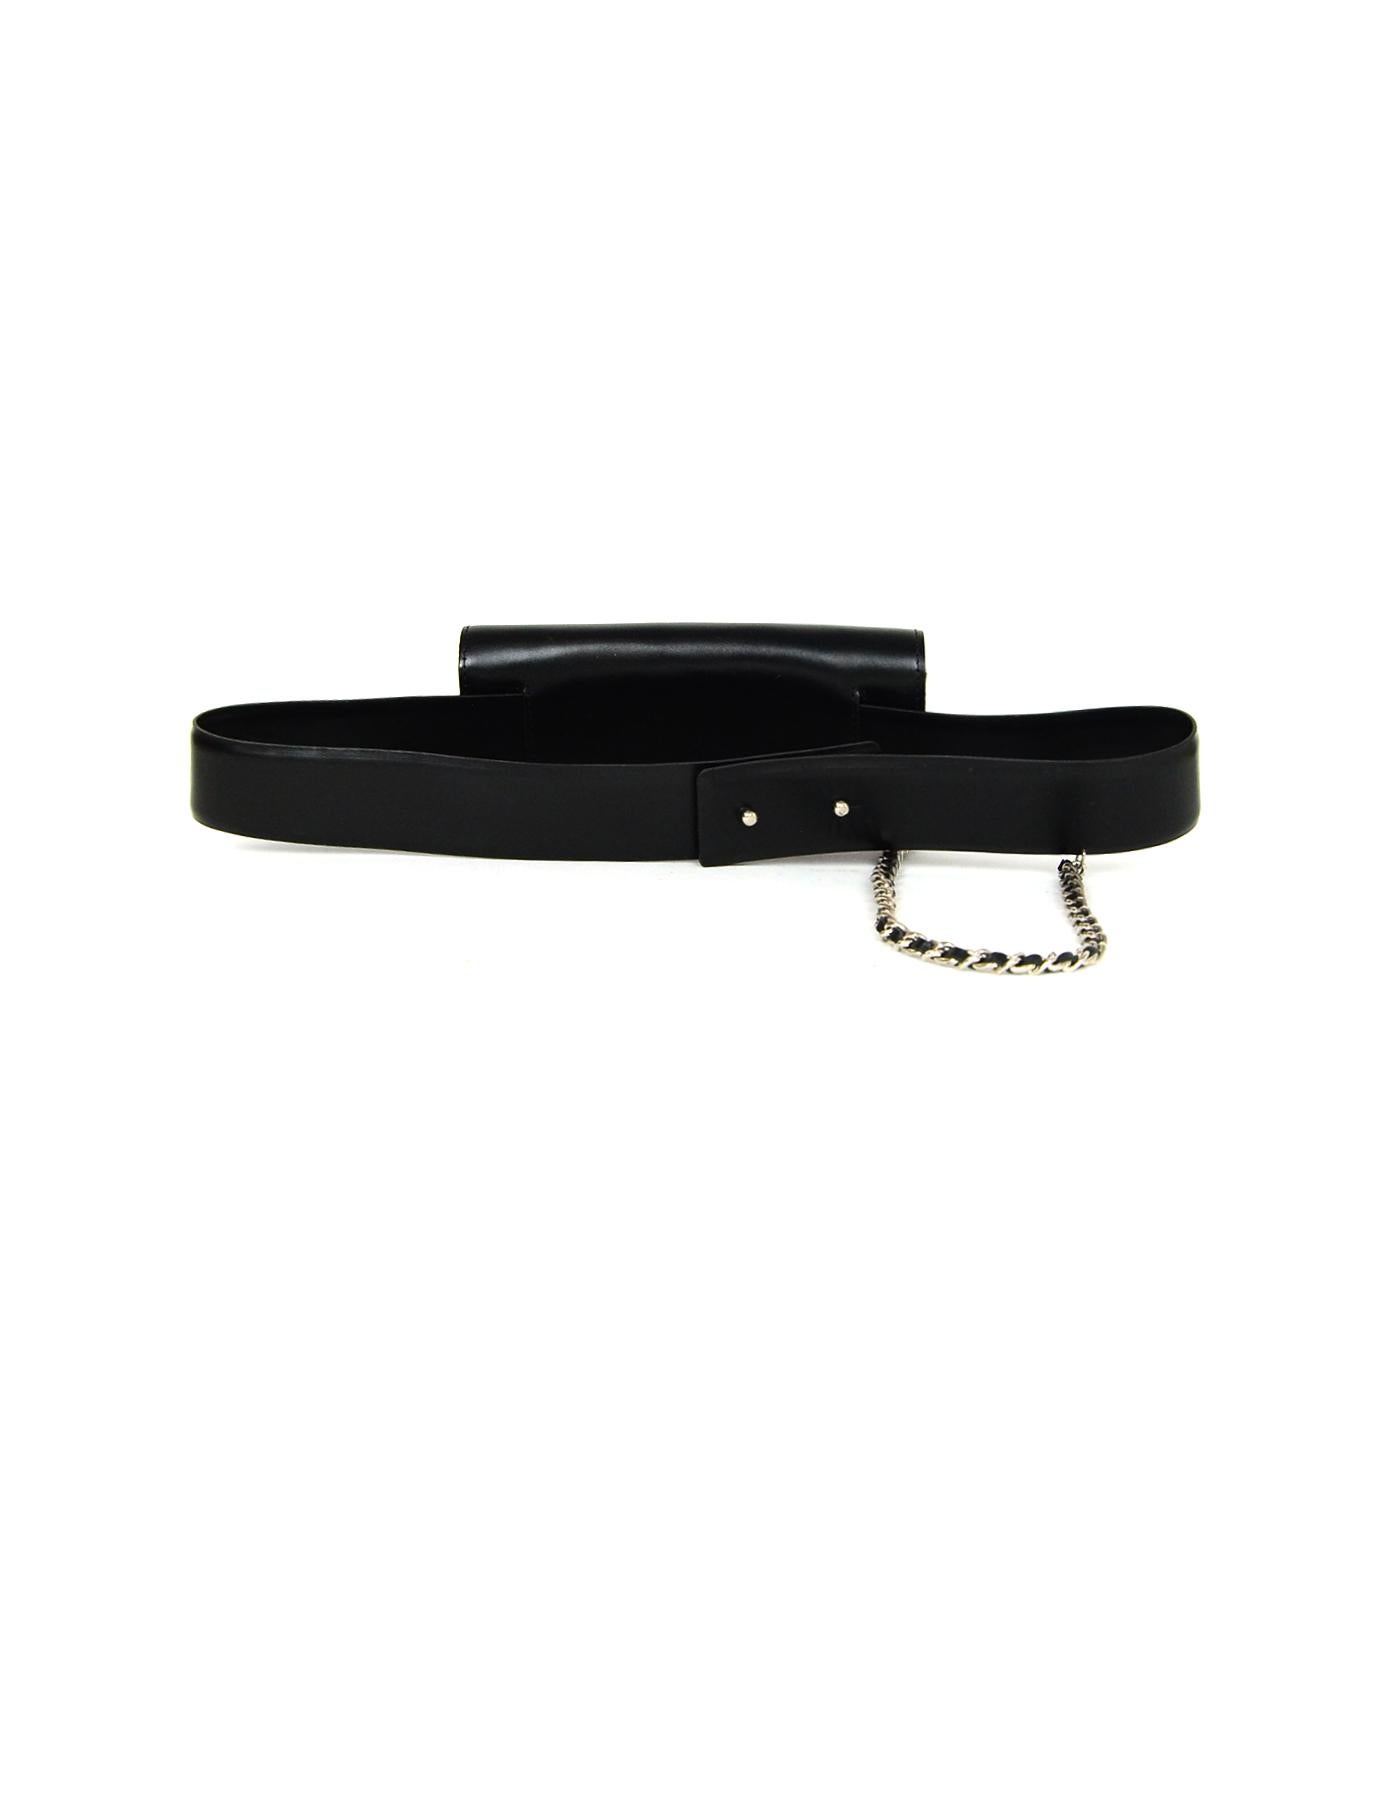 Chanel Black Smooth Leather 2.55 Reissue Lock Belt Bag w/ Chain 7